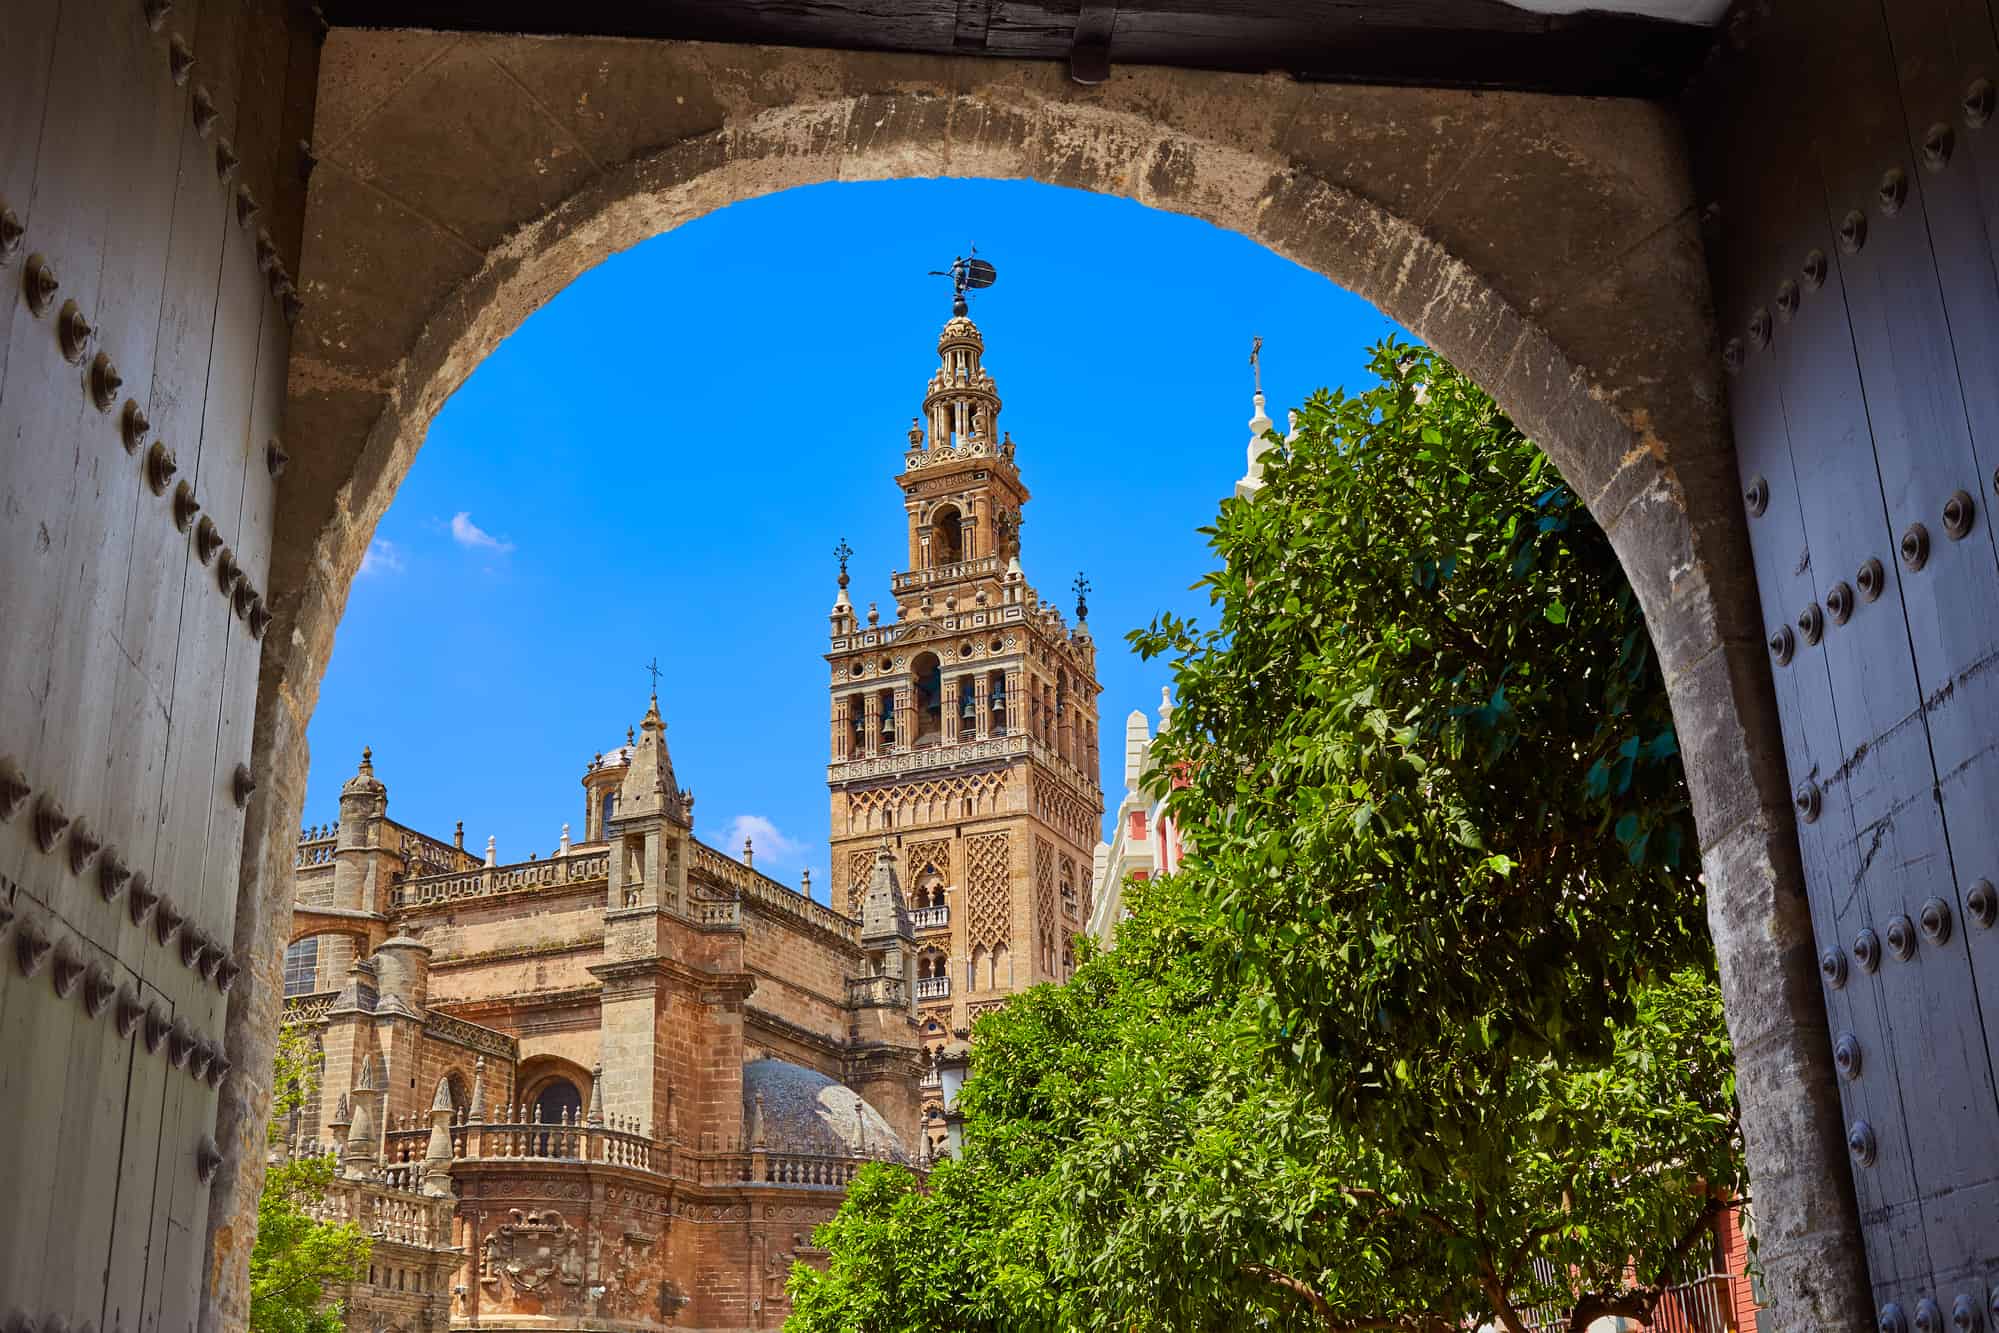 Seville cathedral Giralda tower from Alcazar arch door of Sevilla, Spain